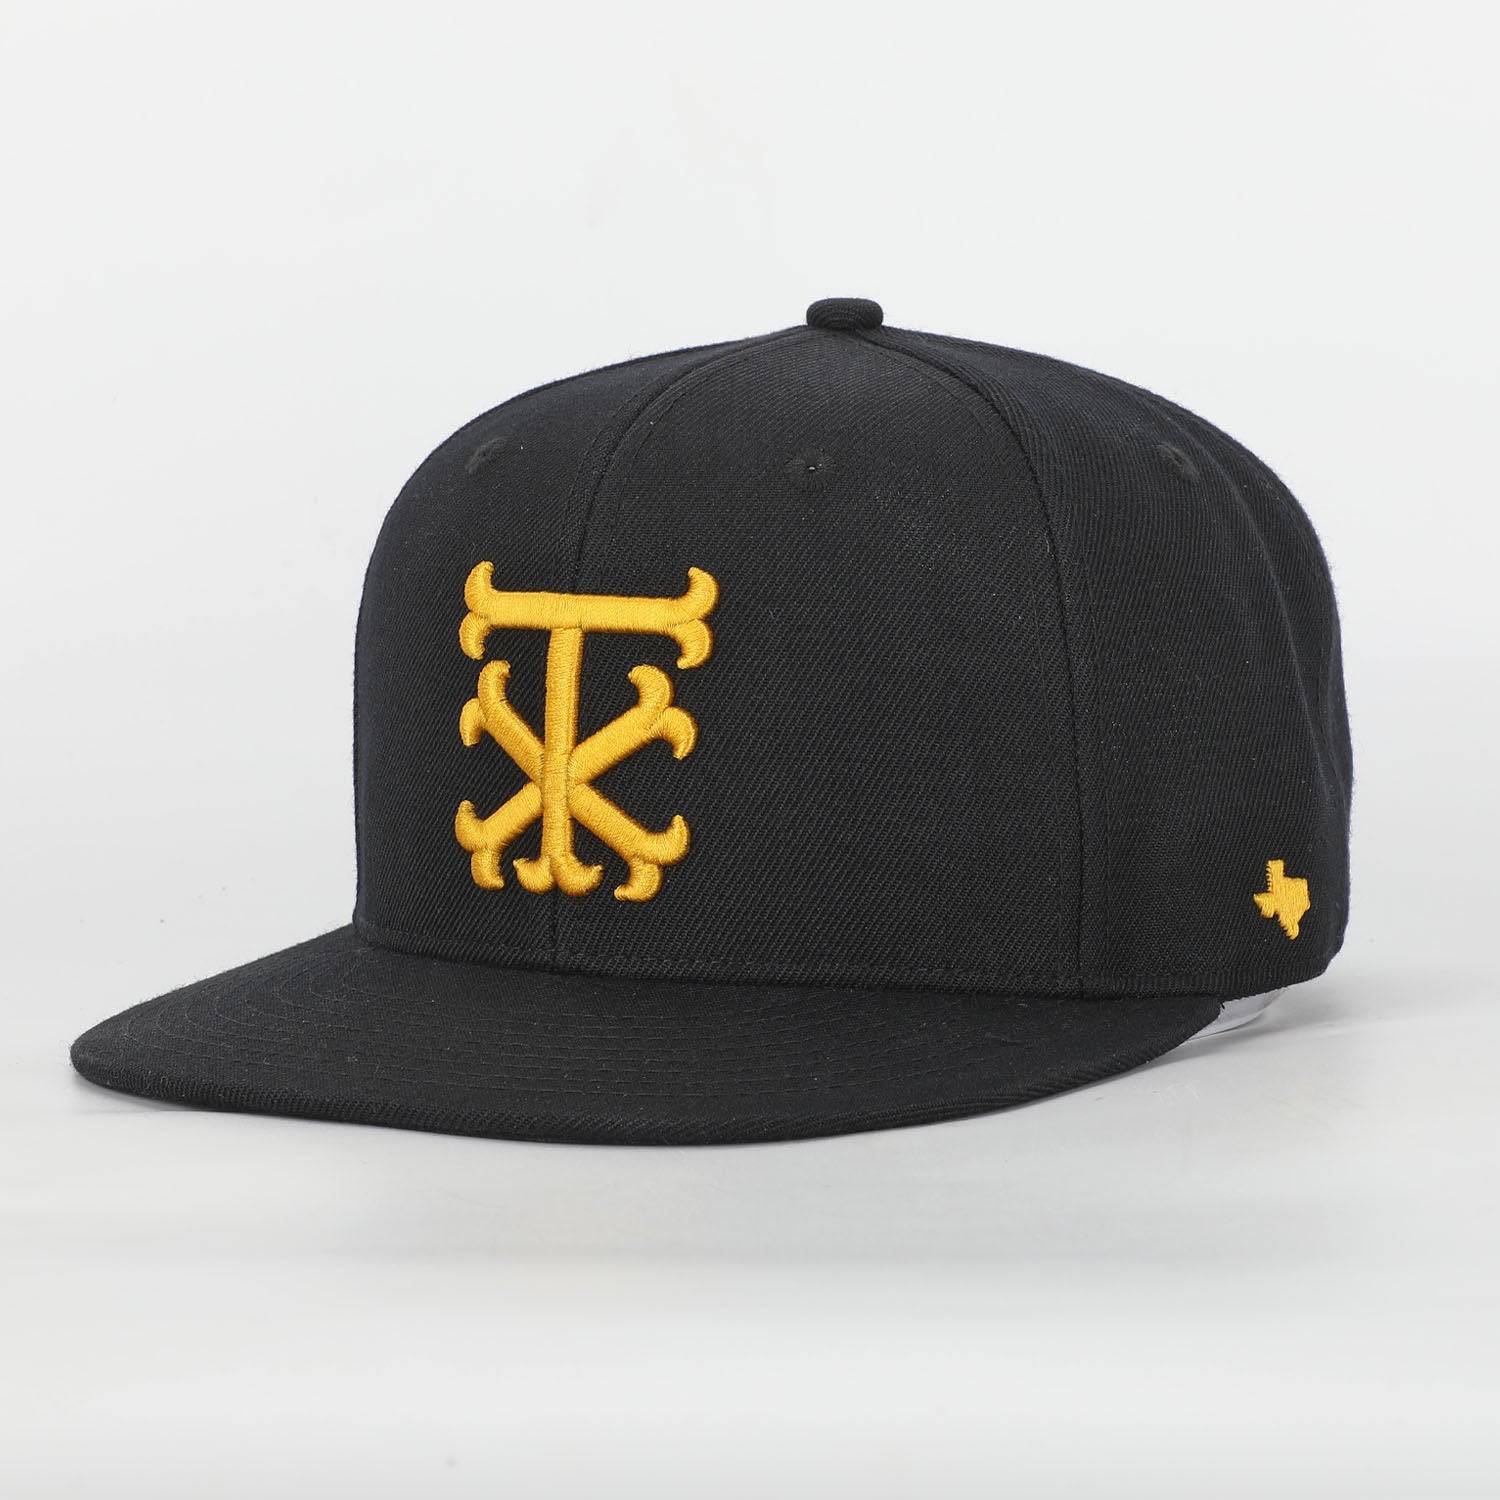 Txers, Txers Gear, Black Gold, Snapback, 9fifty, 59fifty, New era, Pittsburgh Hat, Steelers hat, Texas hat, TX hat